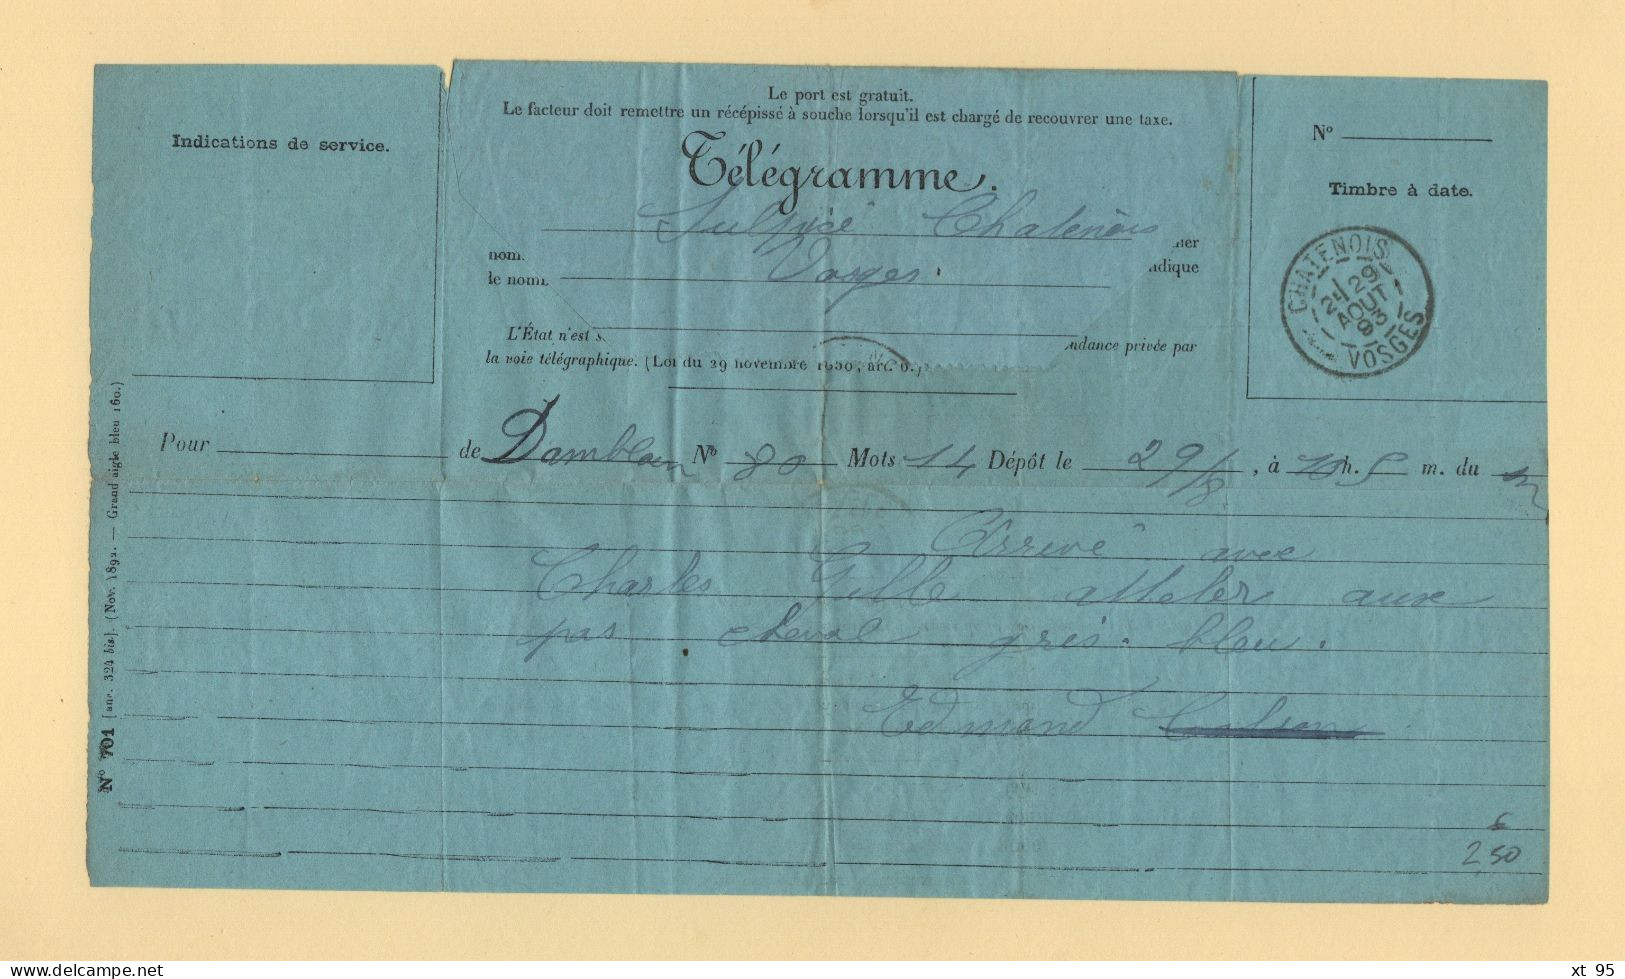 Chatenois - Vosges - 1893 - Telegramme - 1877-1920: Semi-moderne Periode